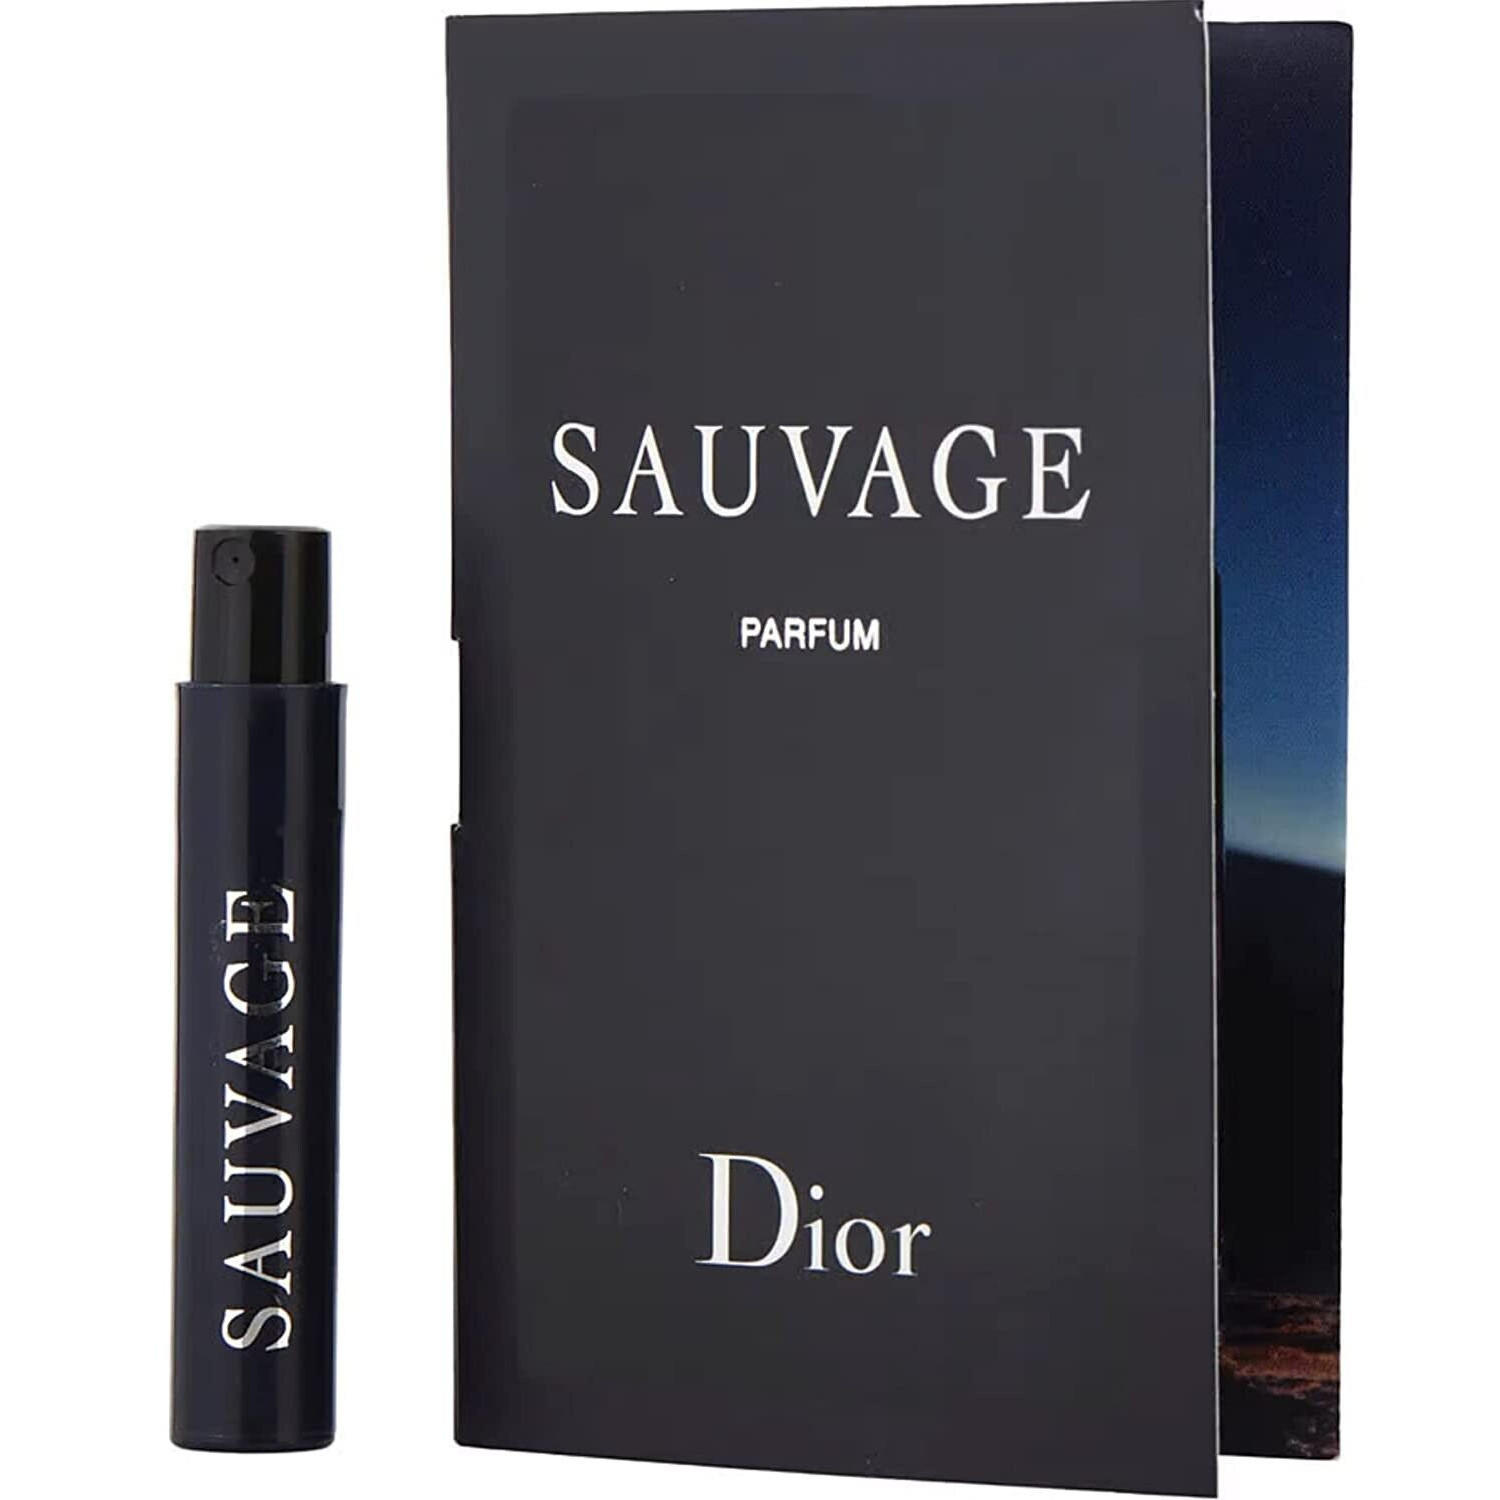 Dior Sauvage Perfume Vial